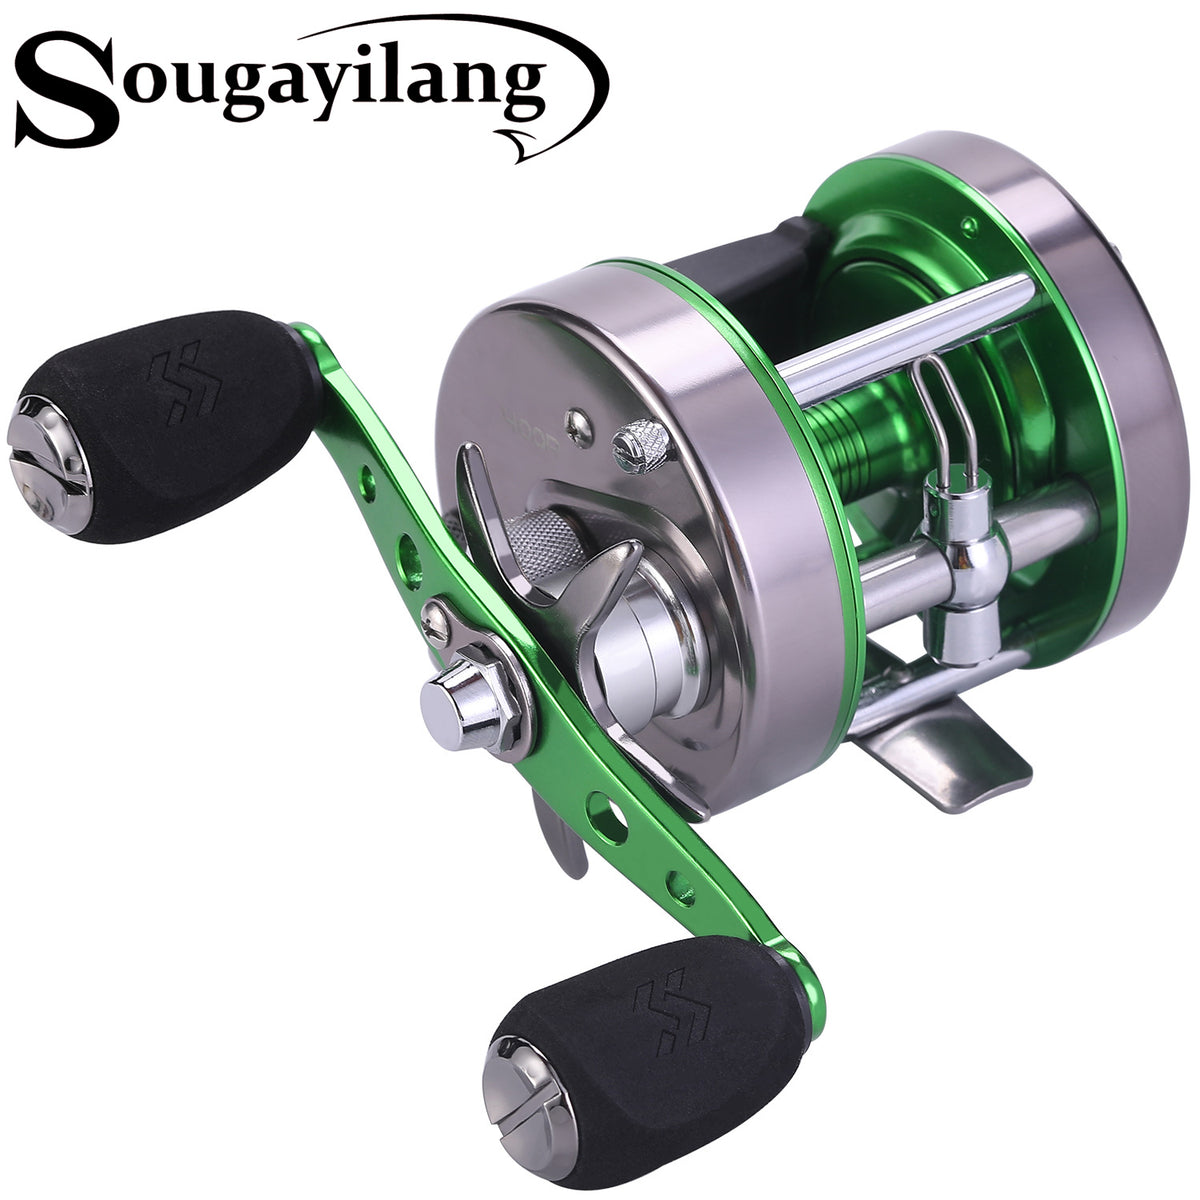 Sougayilang Rover Round Baitcasting Reel Inshore Saltwater Fishing,  Conventional Reel-Reinforced Metal Body for Catfish,Salmon/Steelhead,  Striper Bass